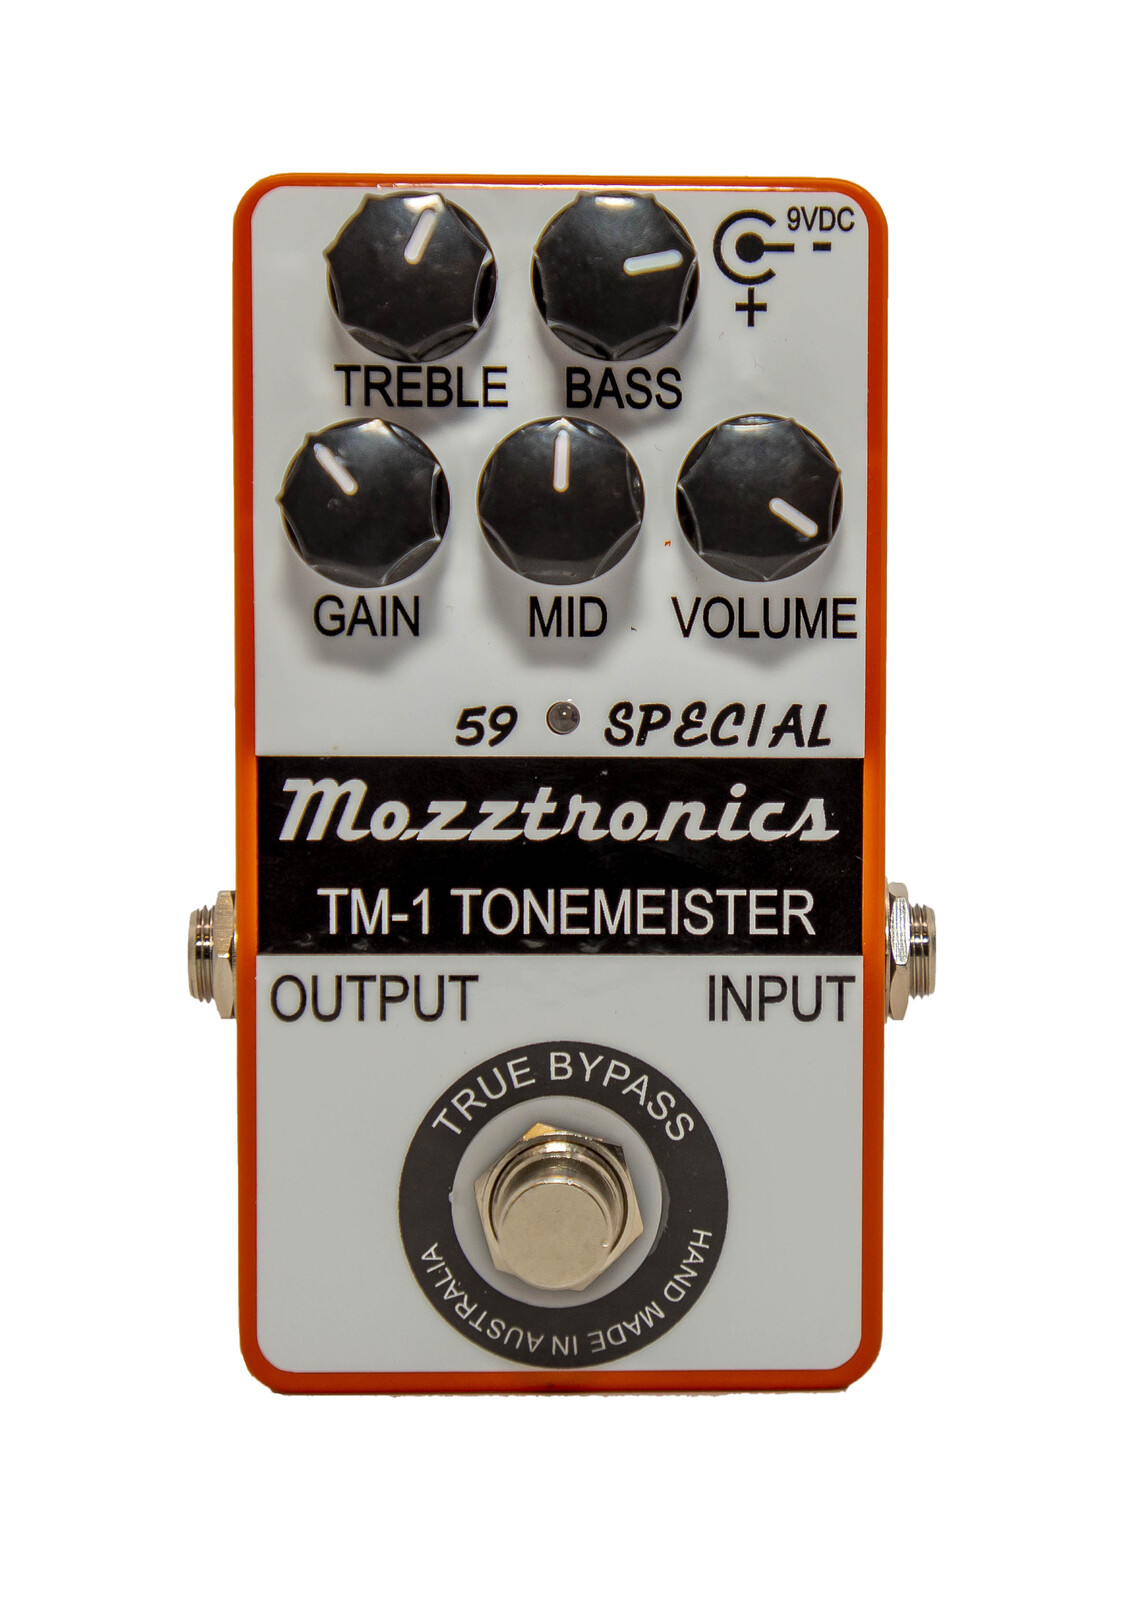 Mozztronics Tm-1 Tonemeister Guitar Effects Pedal